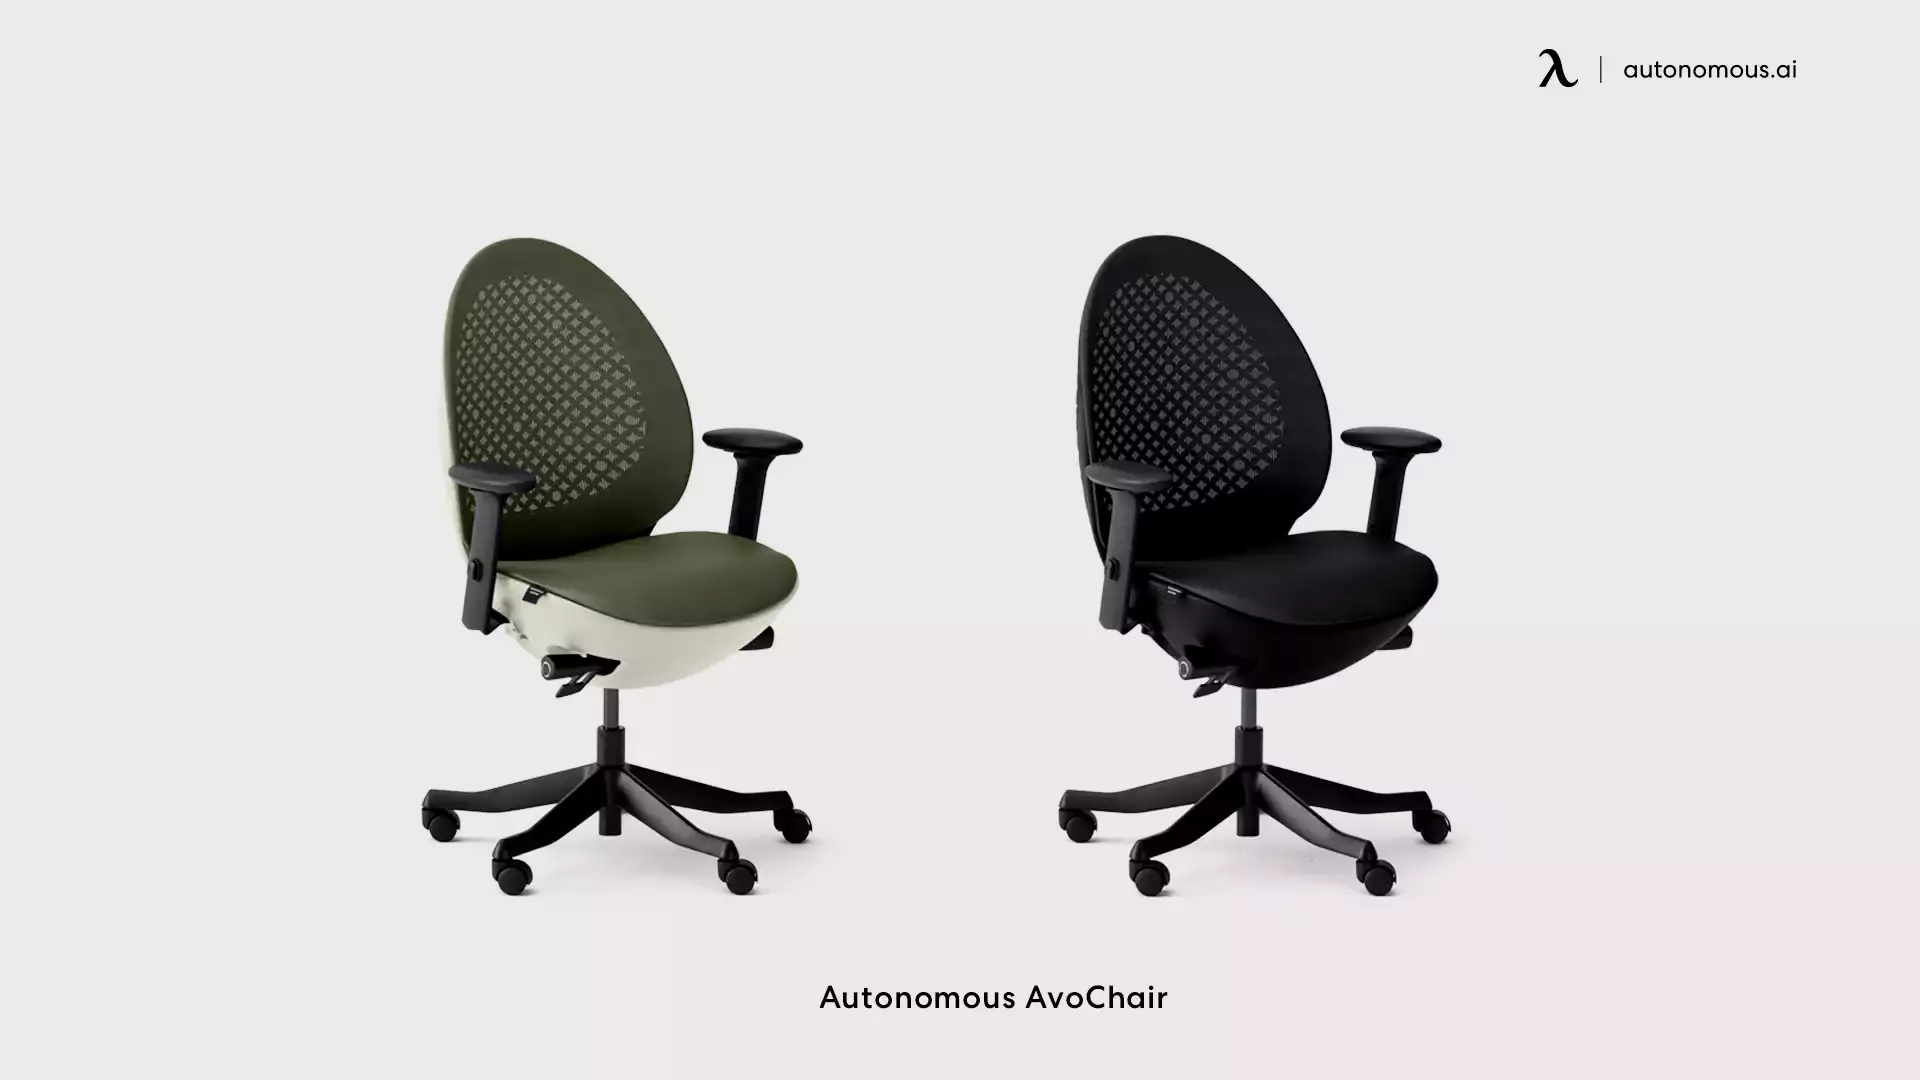 Autonomous AvoChair swivel office chair